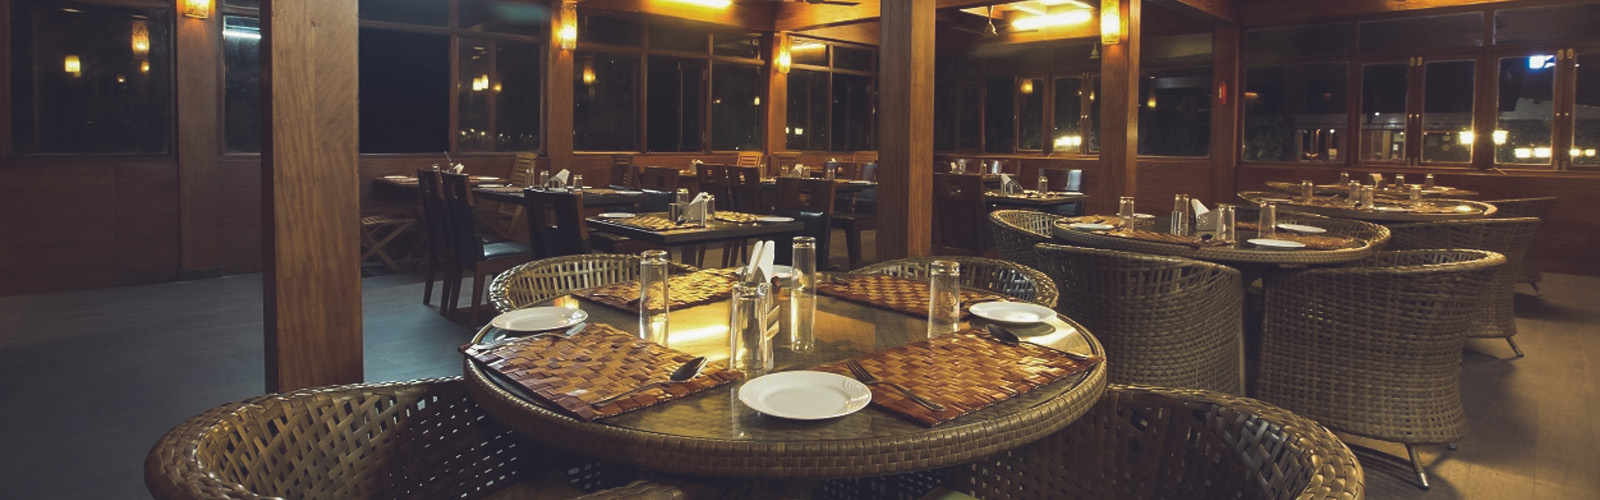 Best Restaurants in Andaman,Top eateries in Andaman,Andaman culinary scene,Best dining experiences in Andaman,Food gems in Andaman,Seafood Delights Andaman,Sea Dragon Restaurant